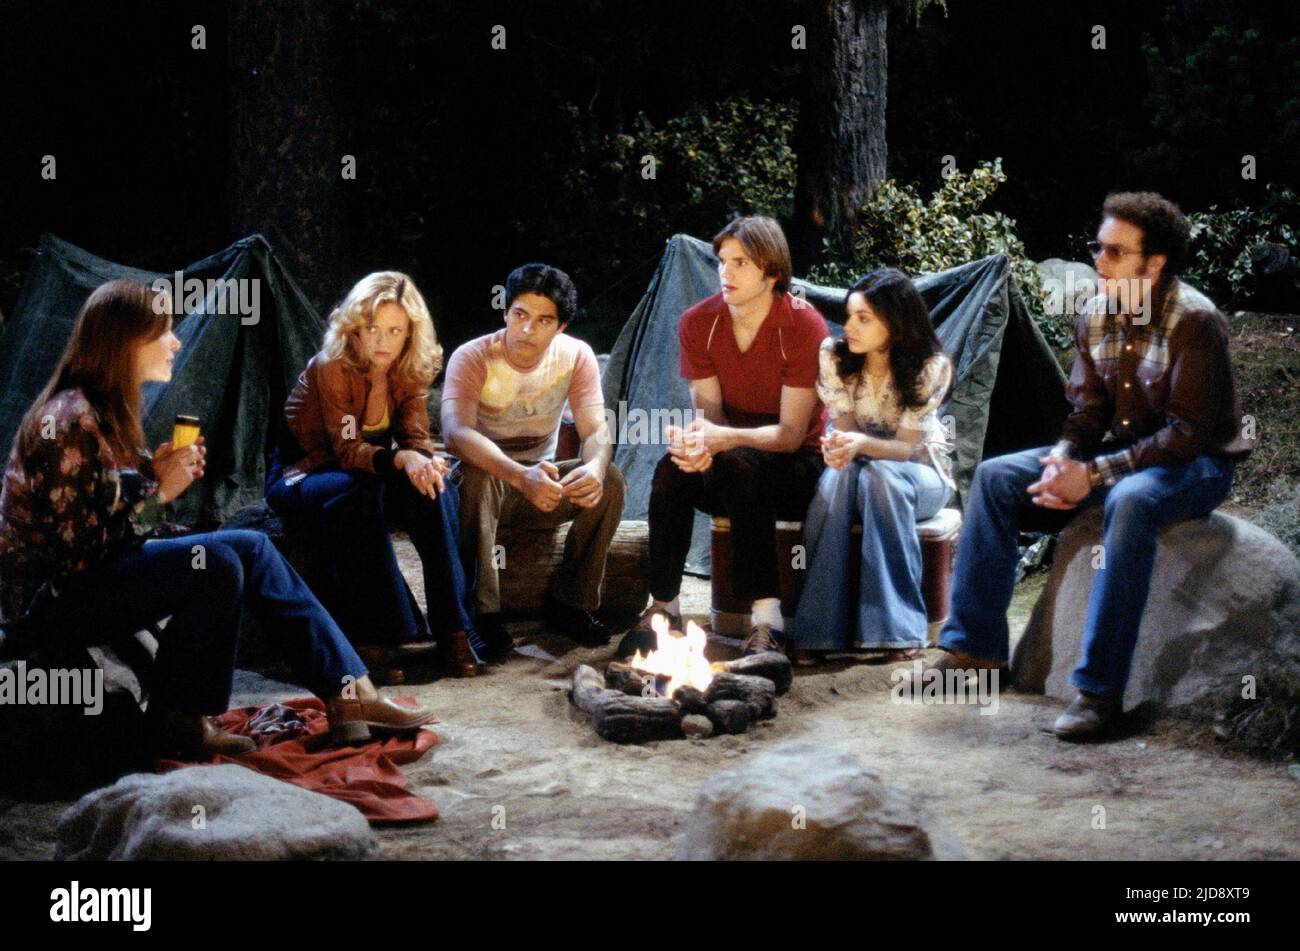 PREPON,KELLY,VALDERRAMA,KUTCHER,KUNIS,MASTERSON, THAT '70S SHOW, 1998, Stock Photo